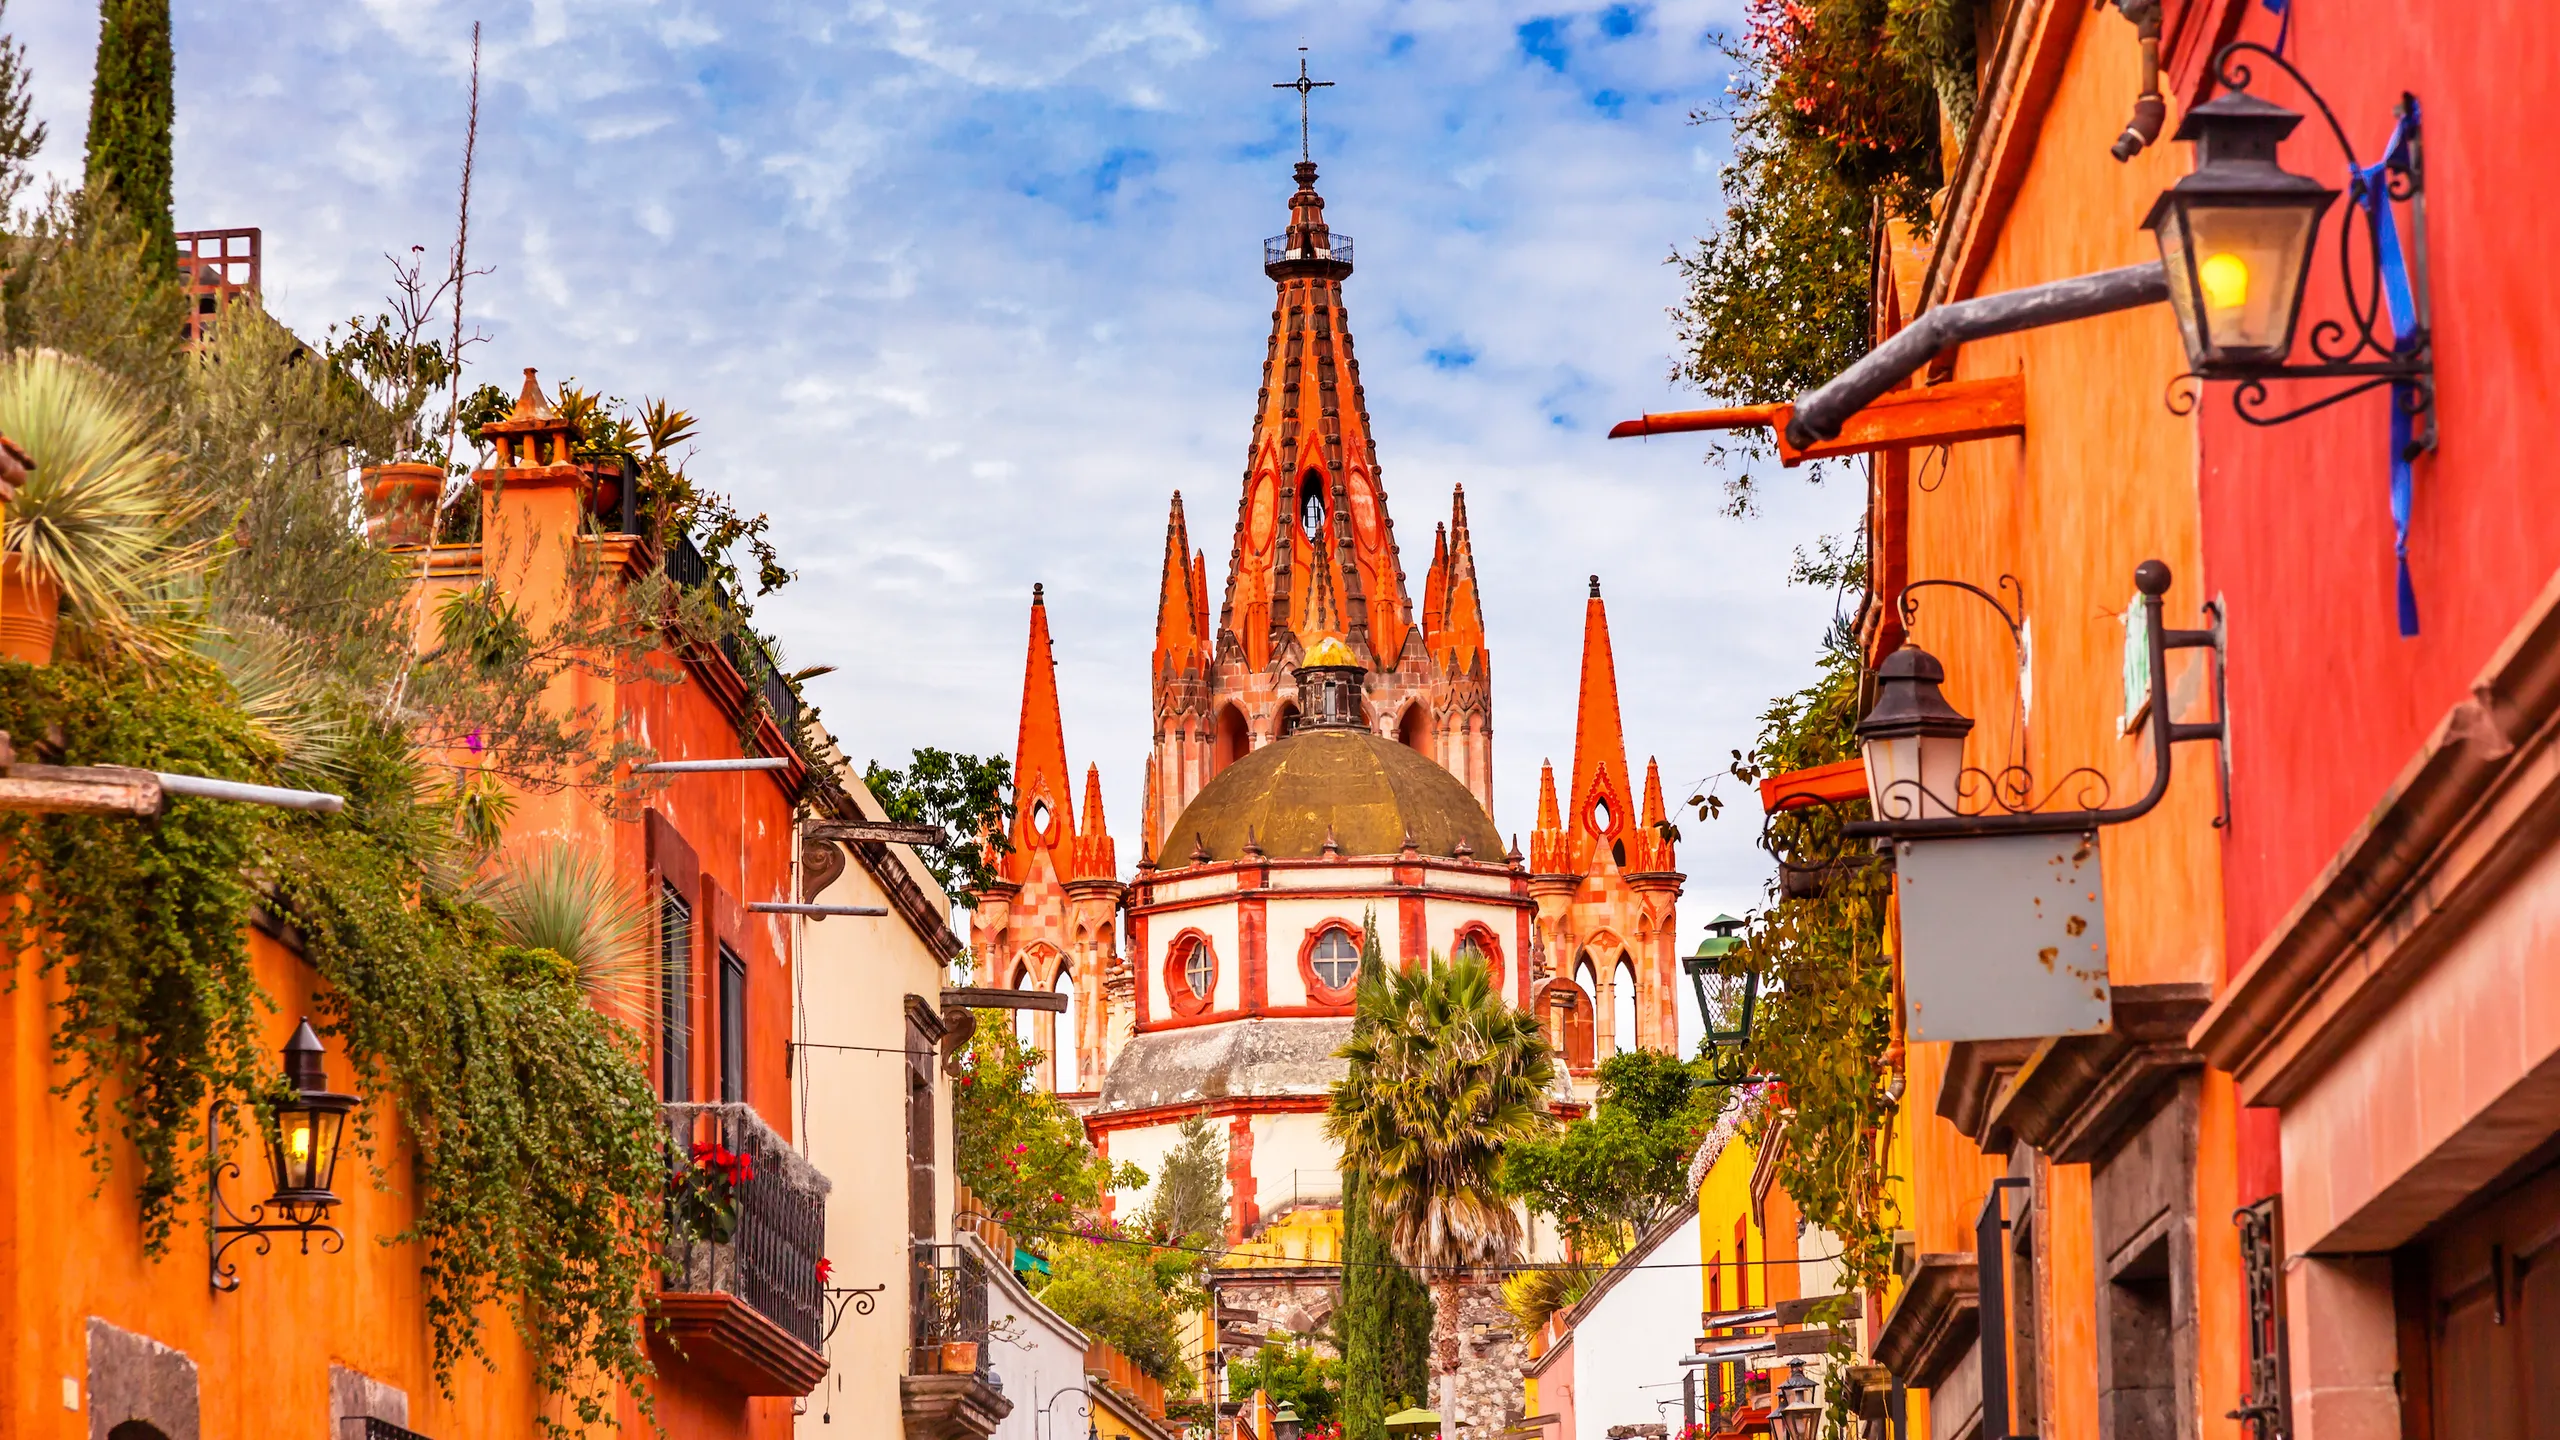 Retire abroad to places like San Miguel de Allende, Mexico.